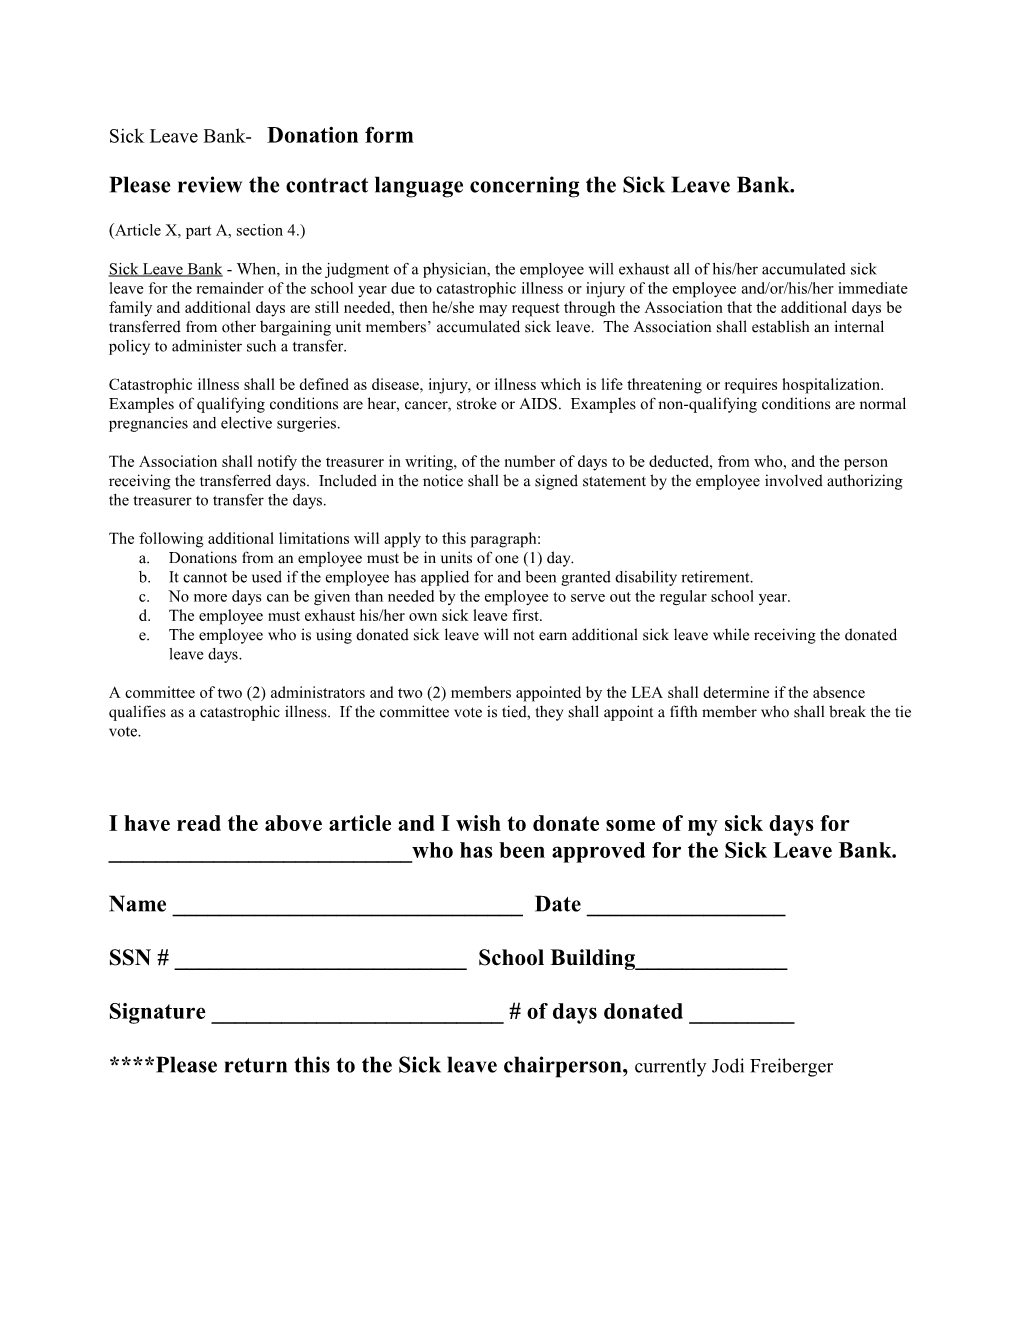 Sick Leave Bank- Donation Form